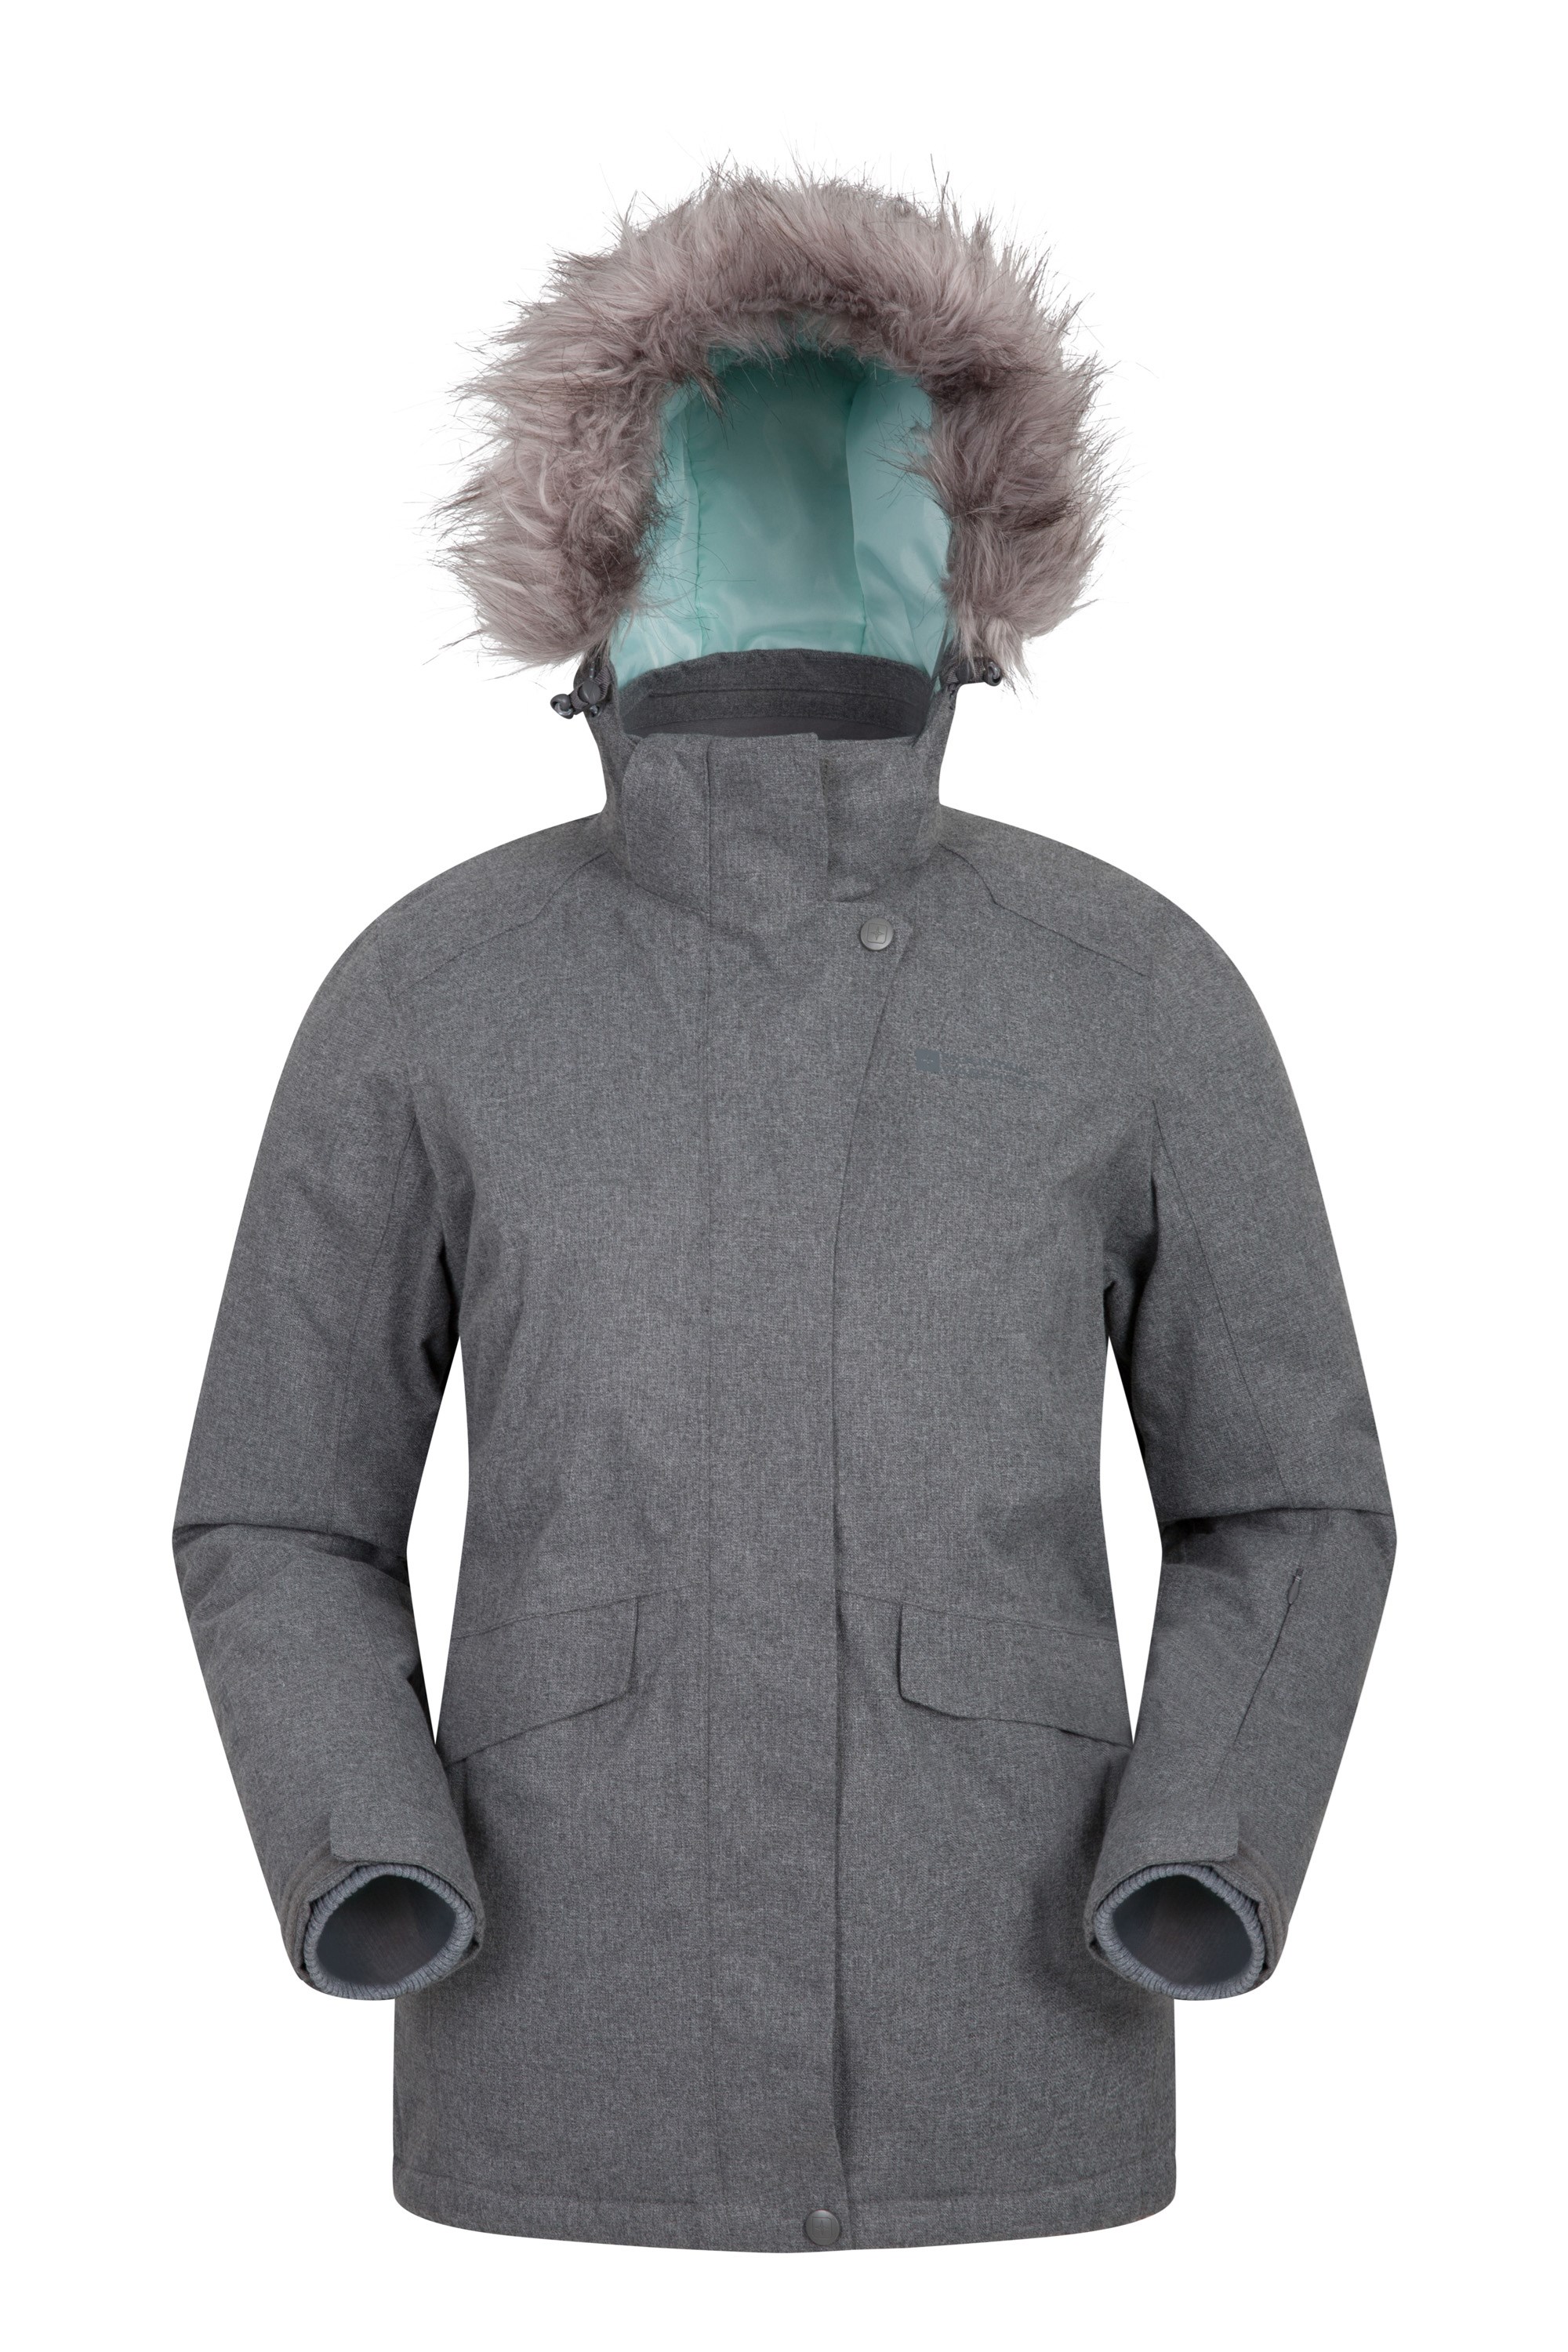 Snowfall Womens Textured Ski Jacket - Grey